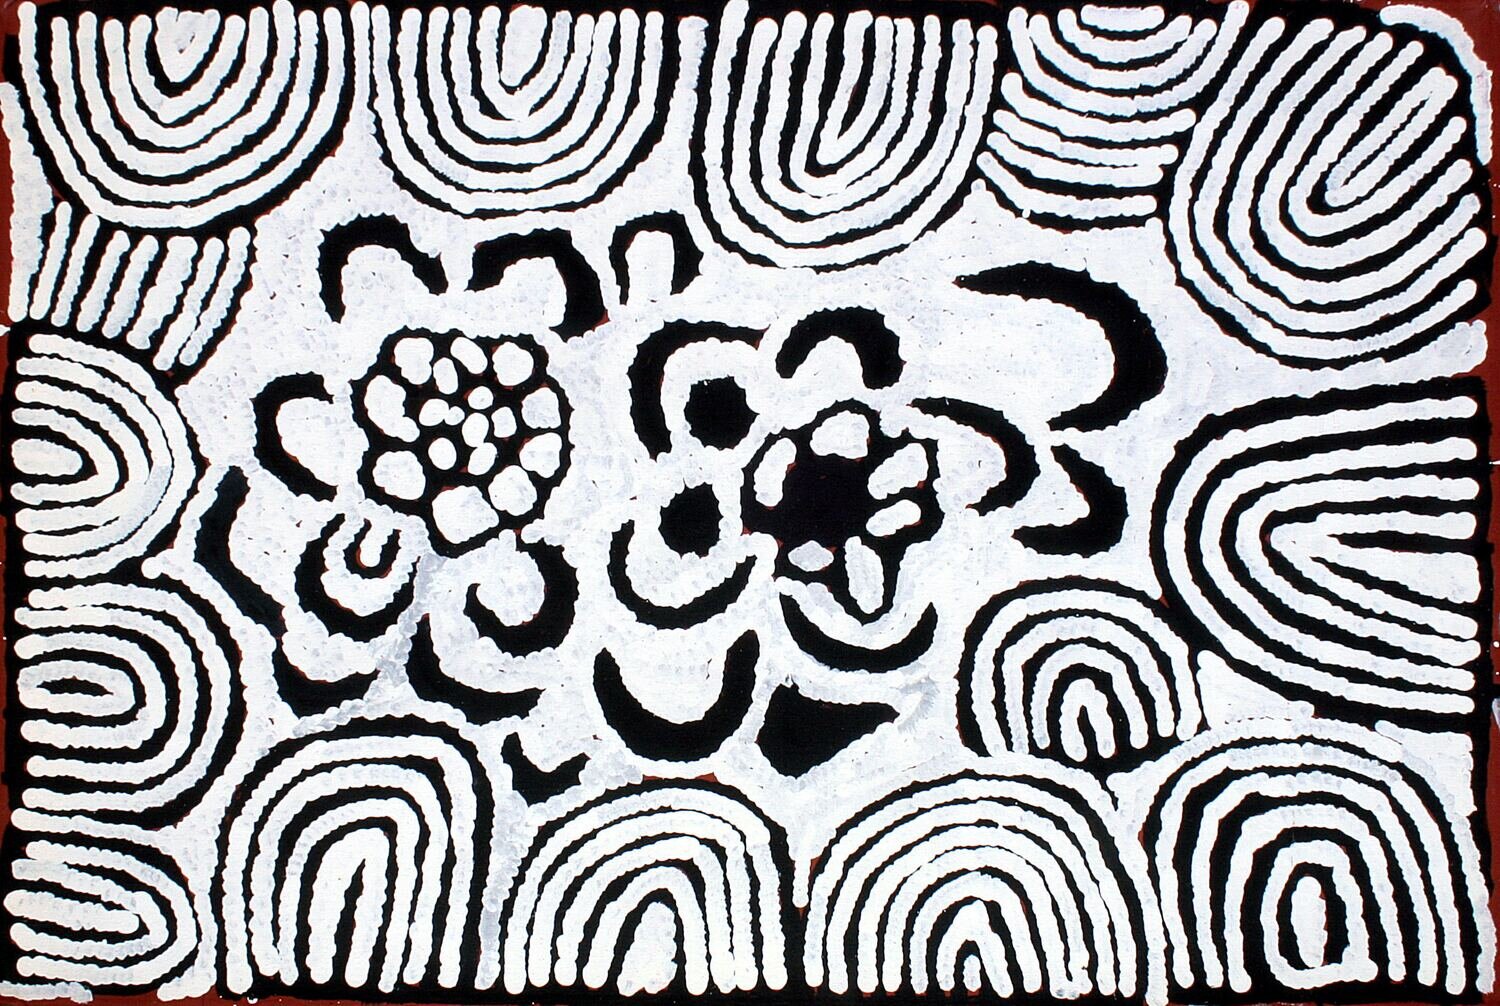 Women's Dreaming, 2001 by Nancy Nungurrayi
61x91cm Cat 6600NN